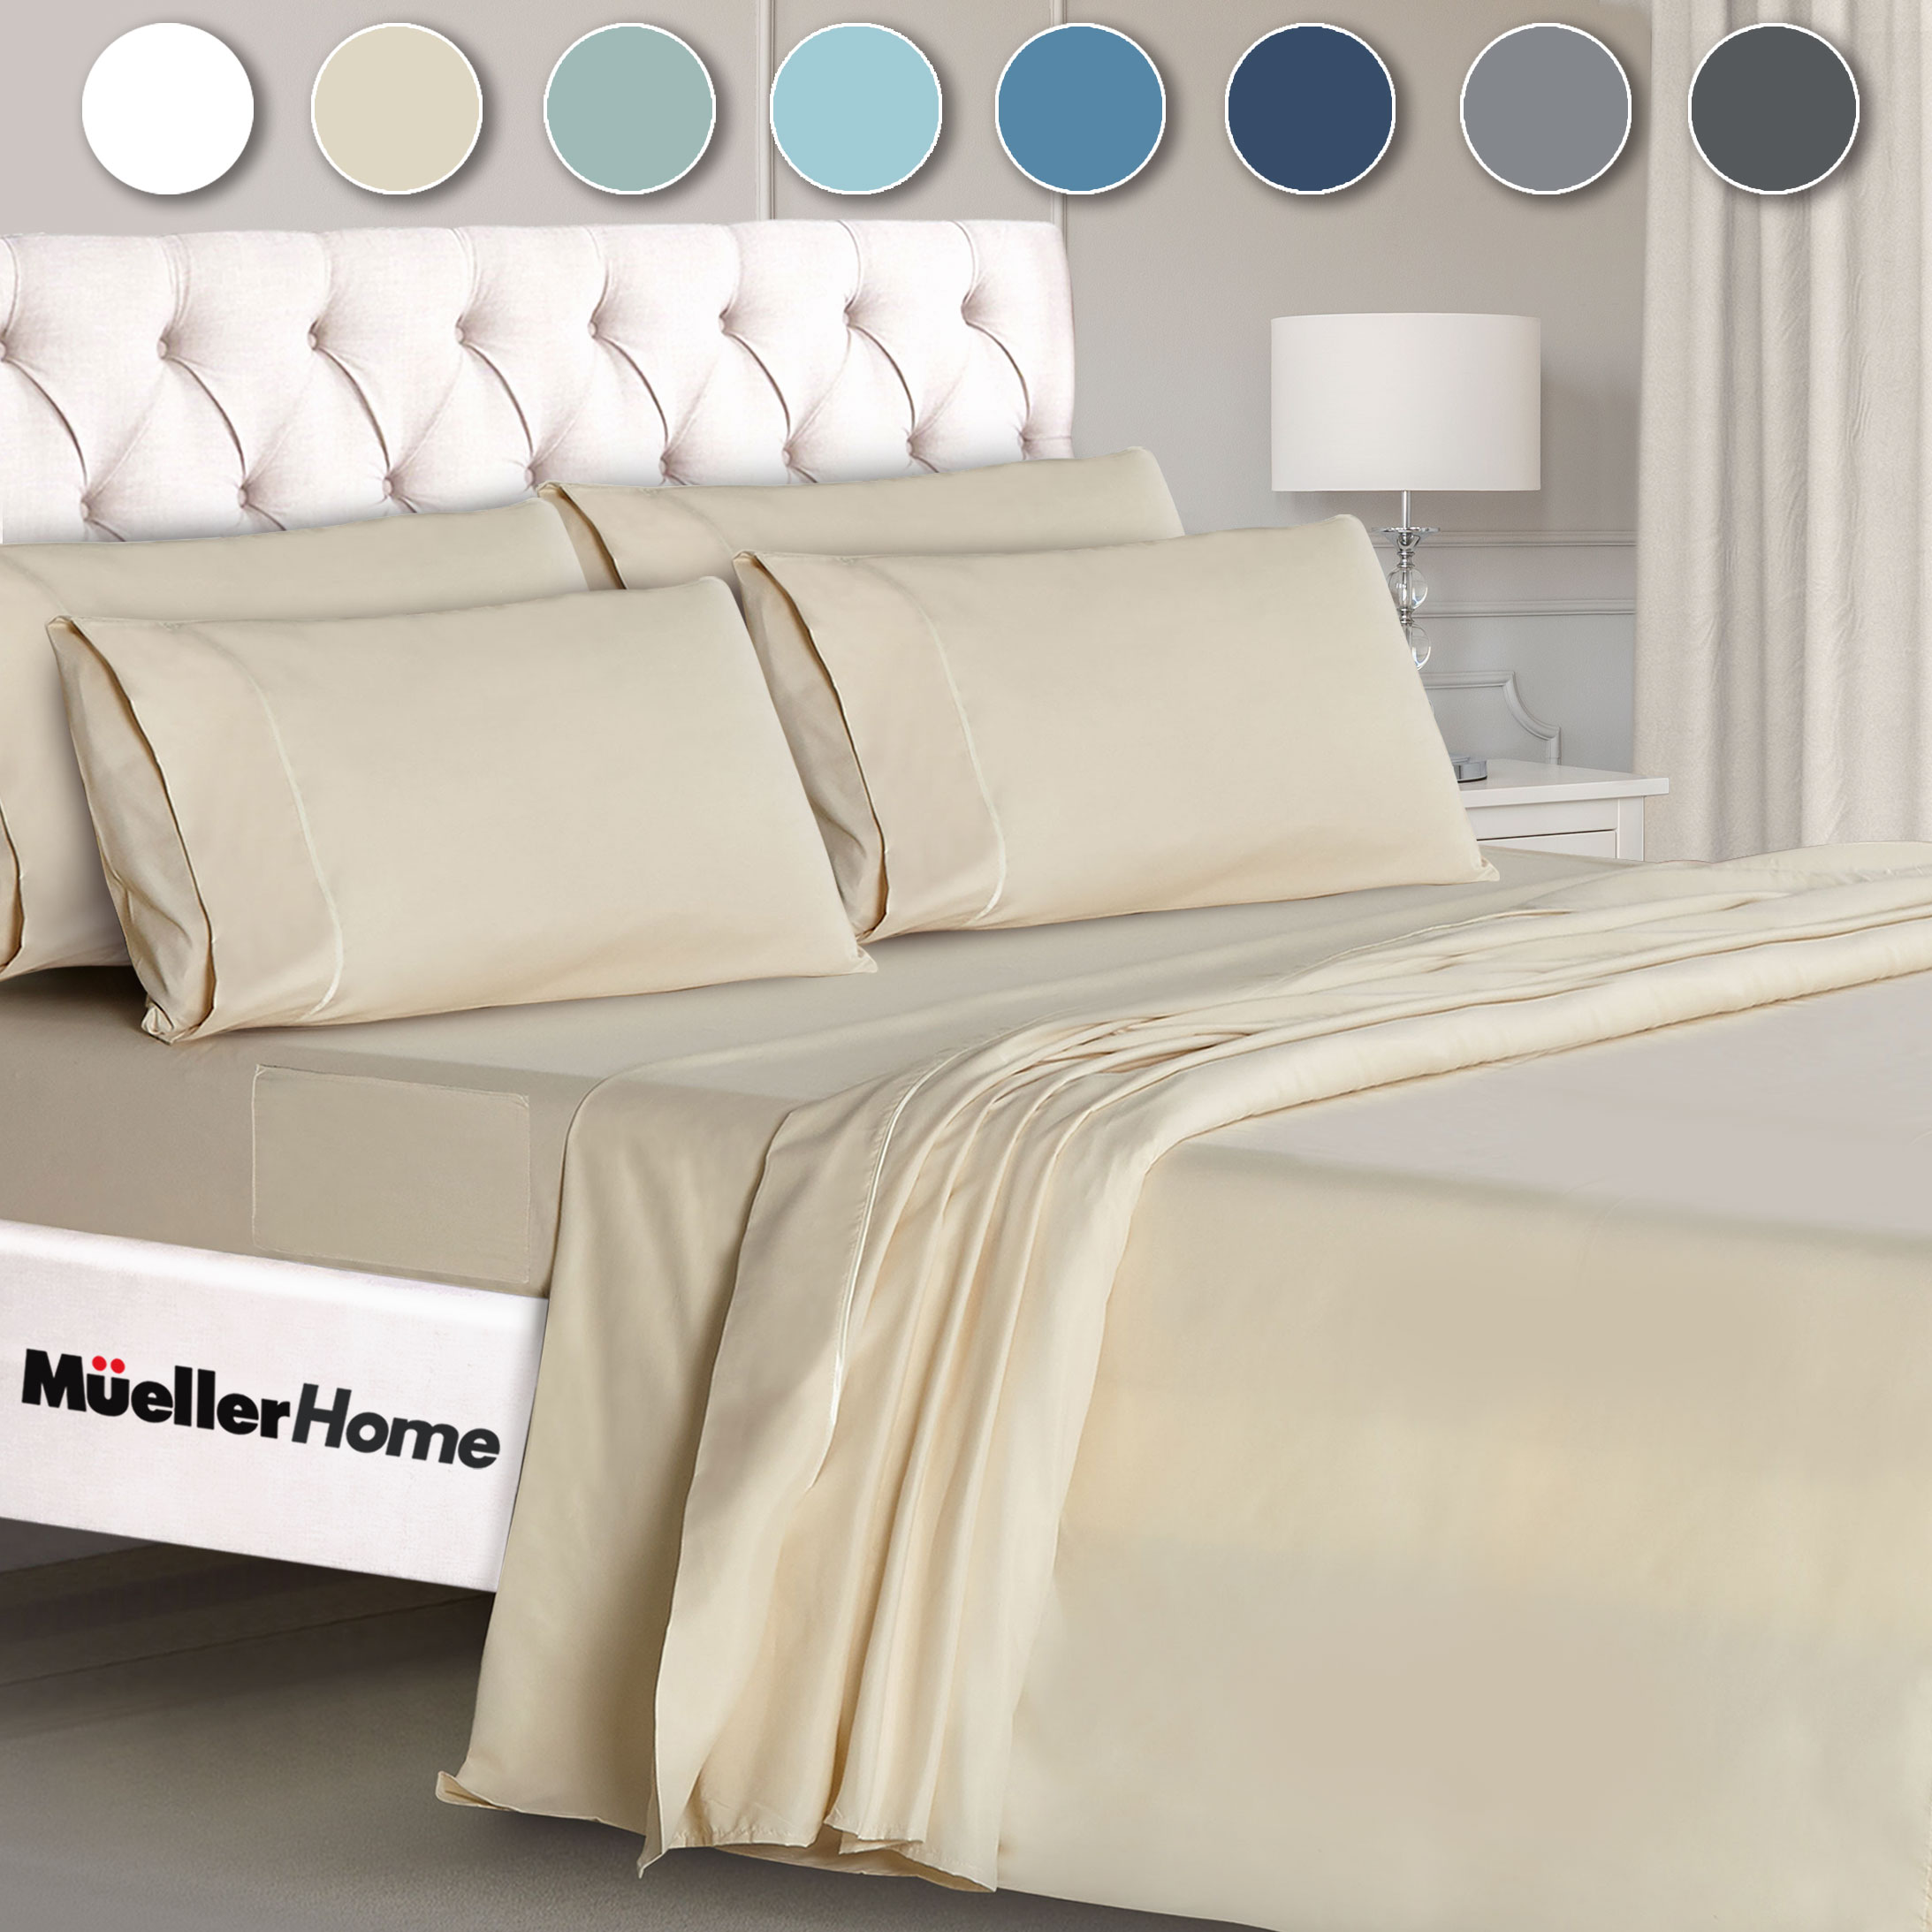 muelleraustria_6PC-Bed-Sheet-Cream-King-size